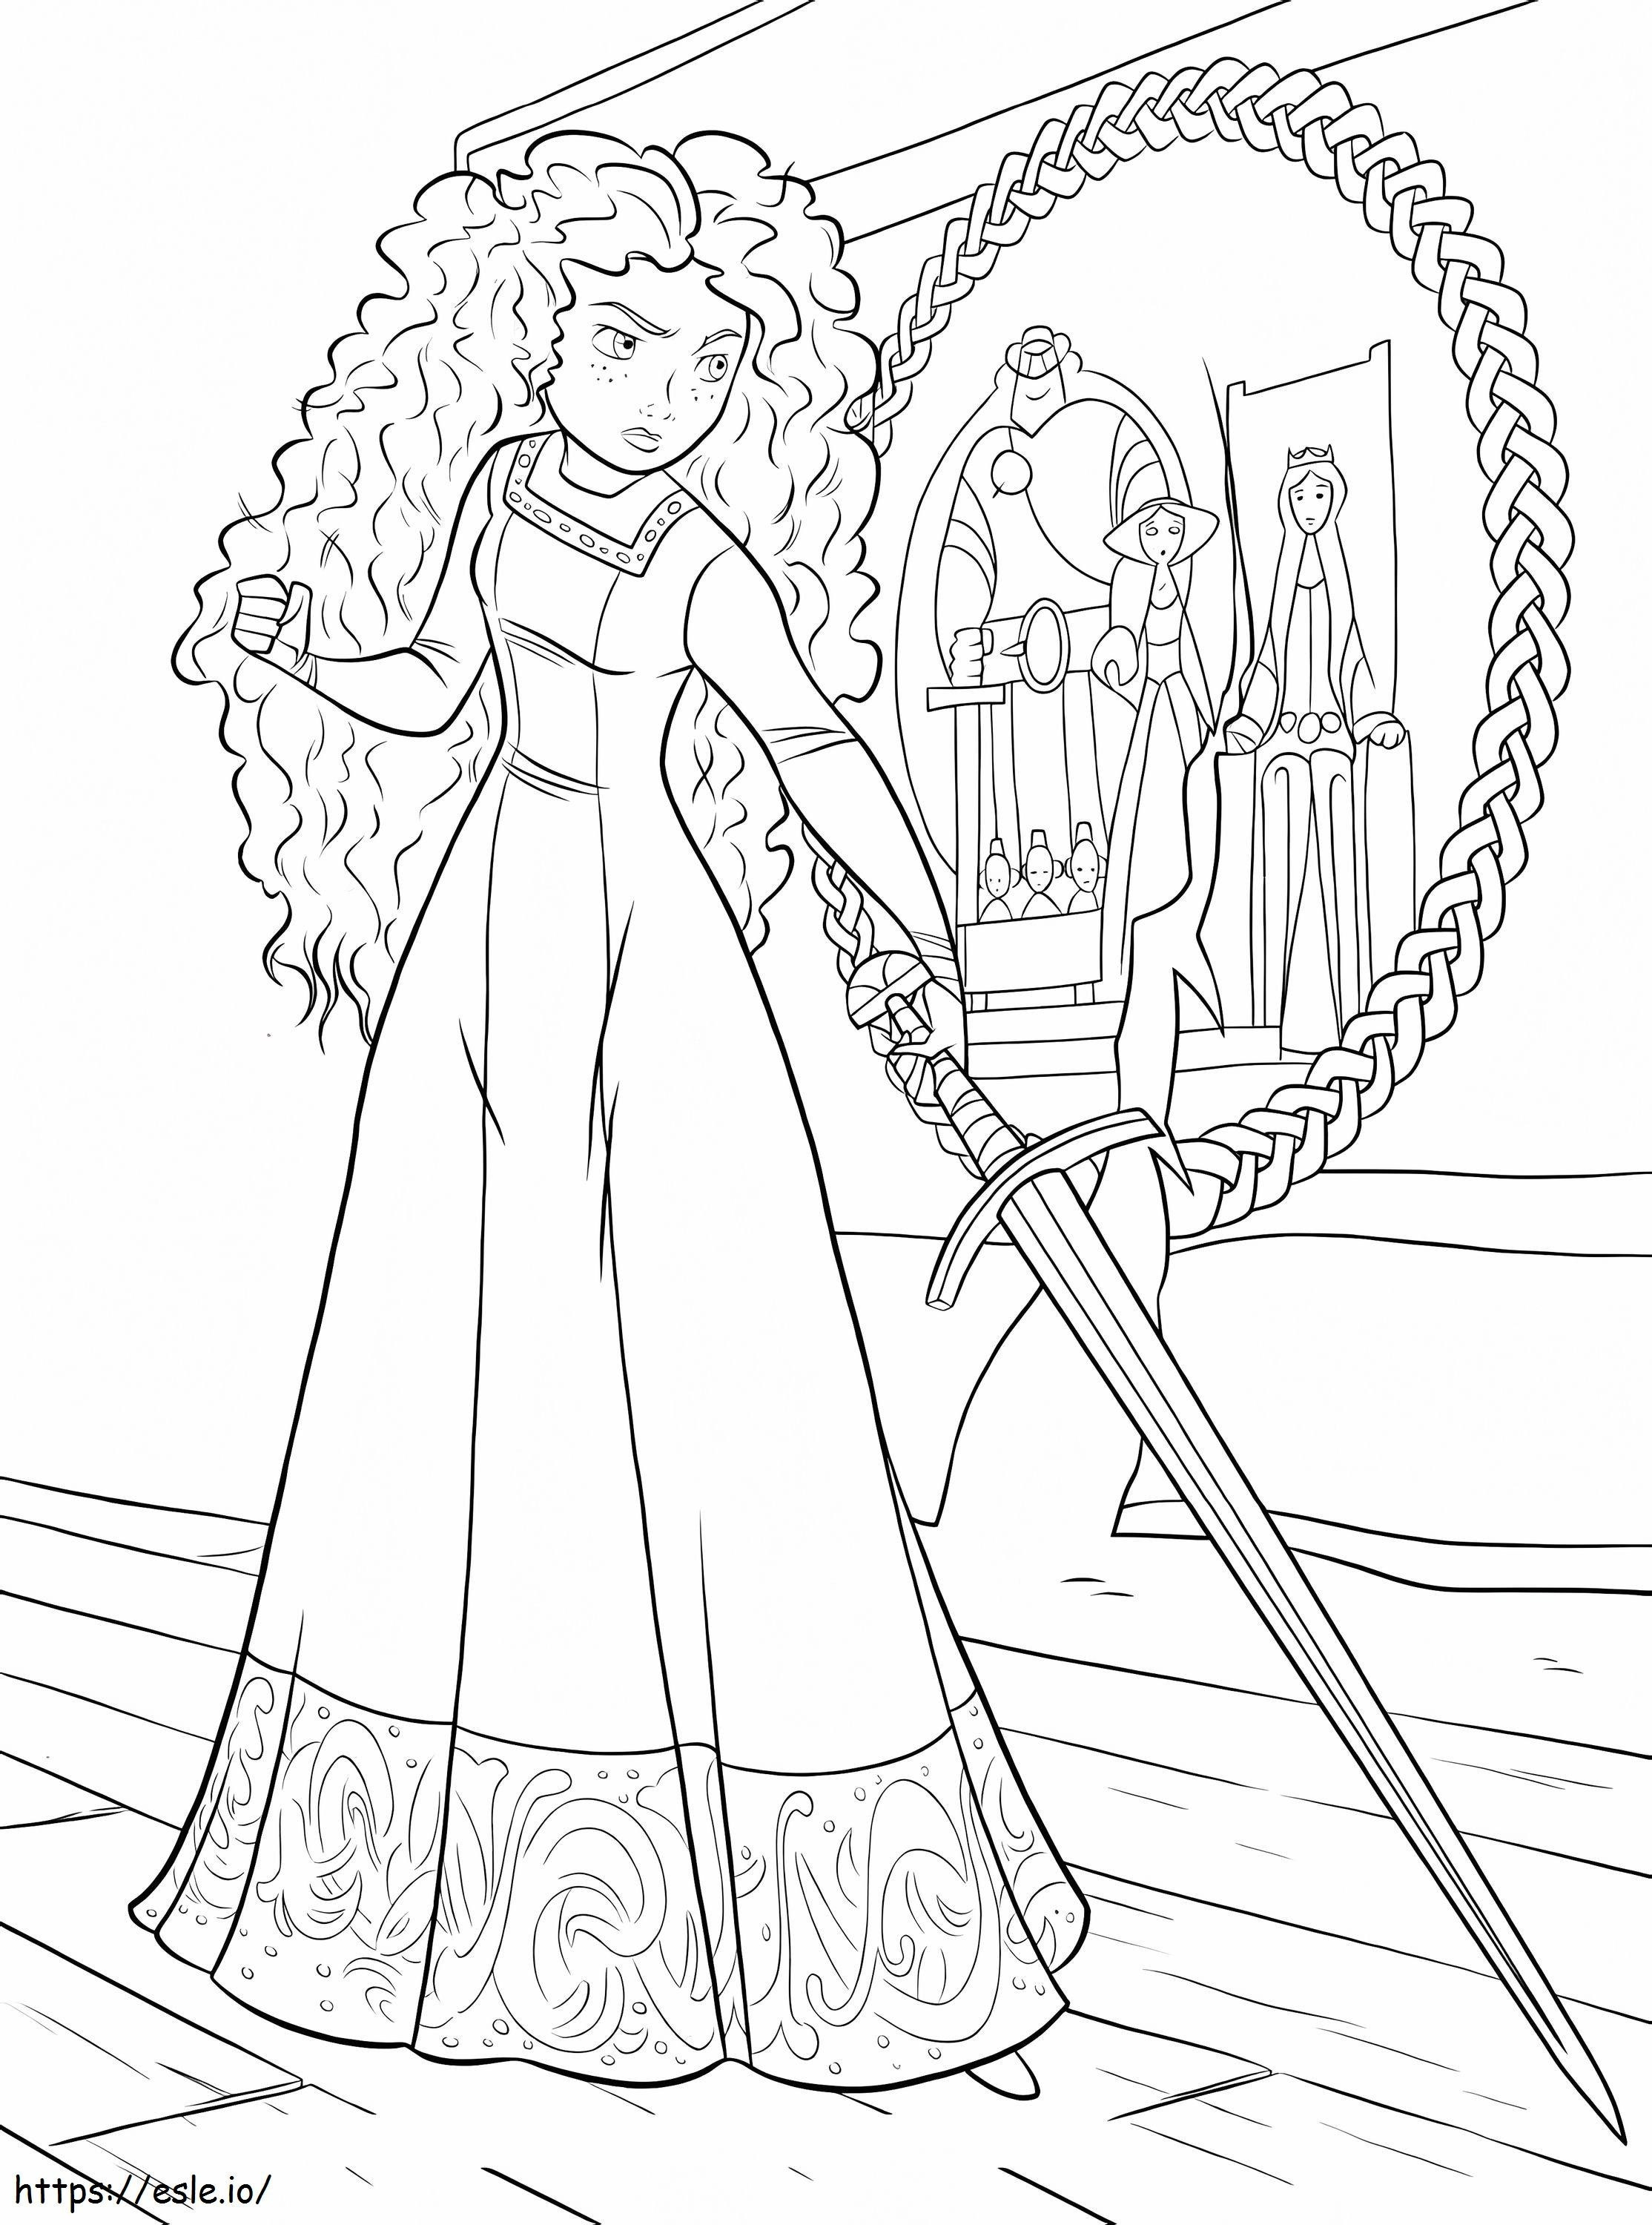 Coloriage Princesse Merida avec épée à imprimer dessin